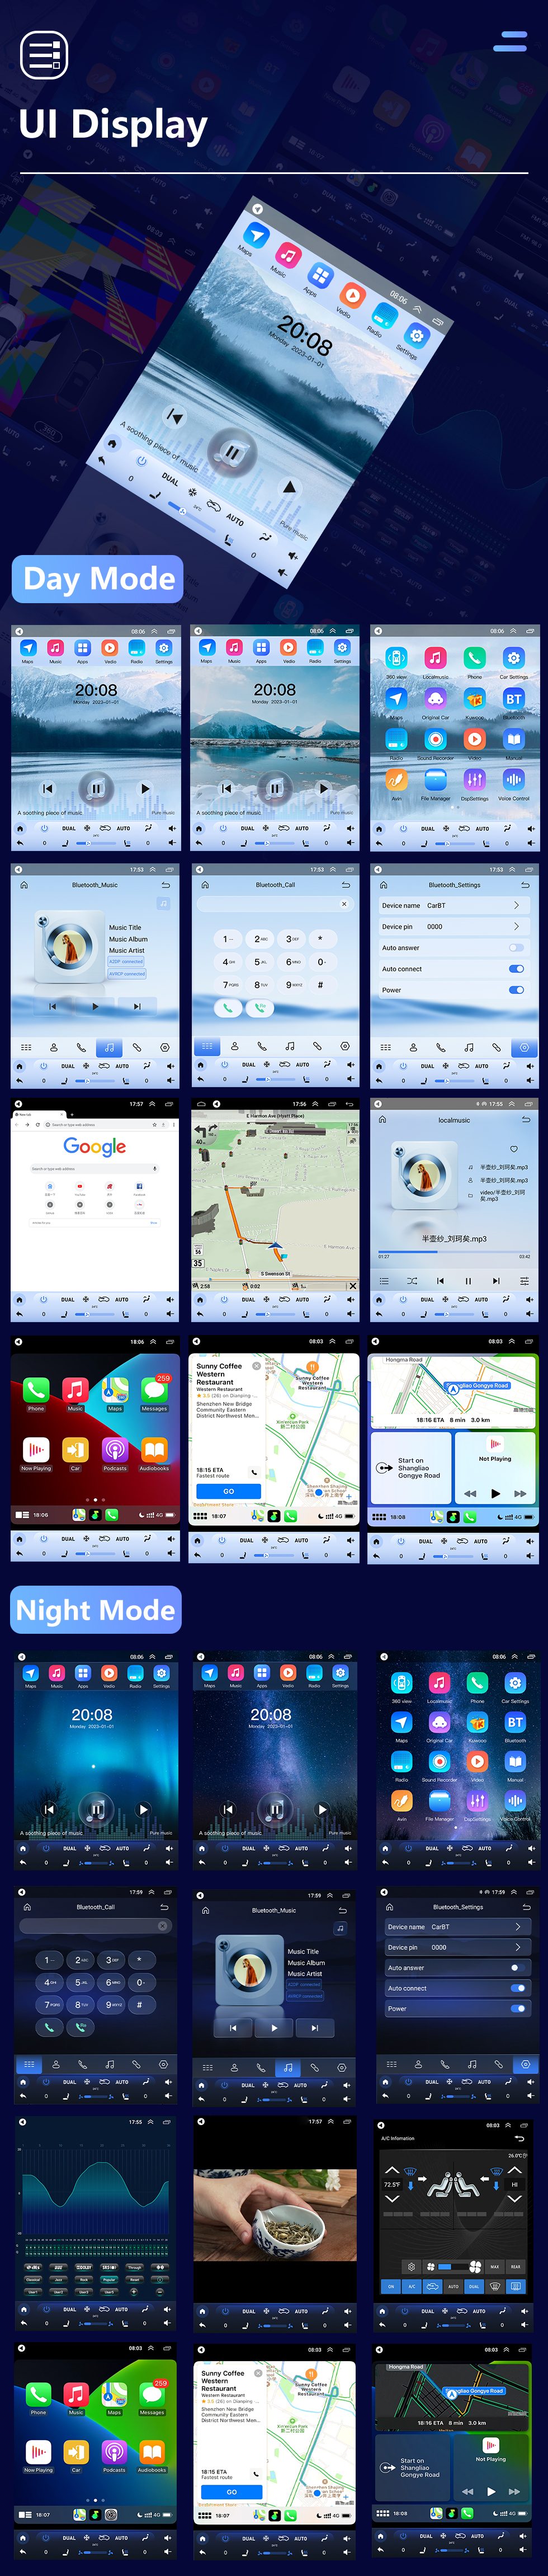 Seicane Carplay OEM 12.1 pulgadas Android 10.0 para 2009 2010 2011-2013 Ford F150 Radio Android Auto Sistema de navegación GPS con pantalla táctil HD Soporte Bluetooth OBD2 DVR